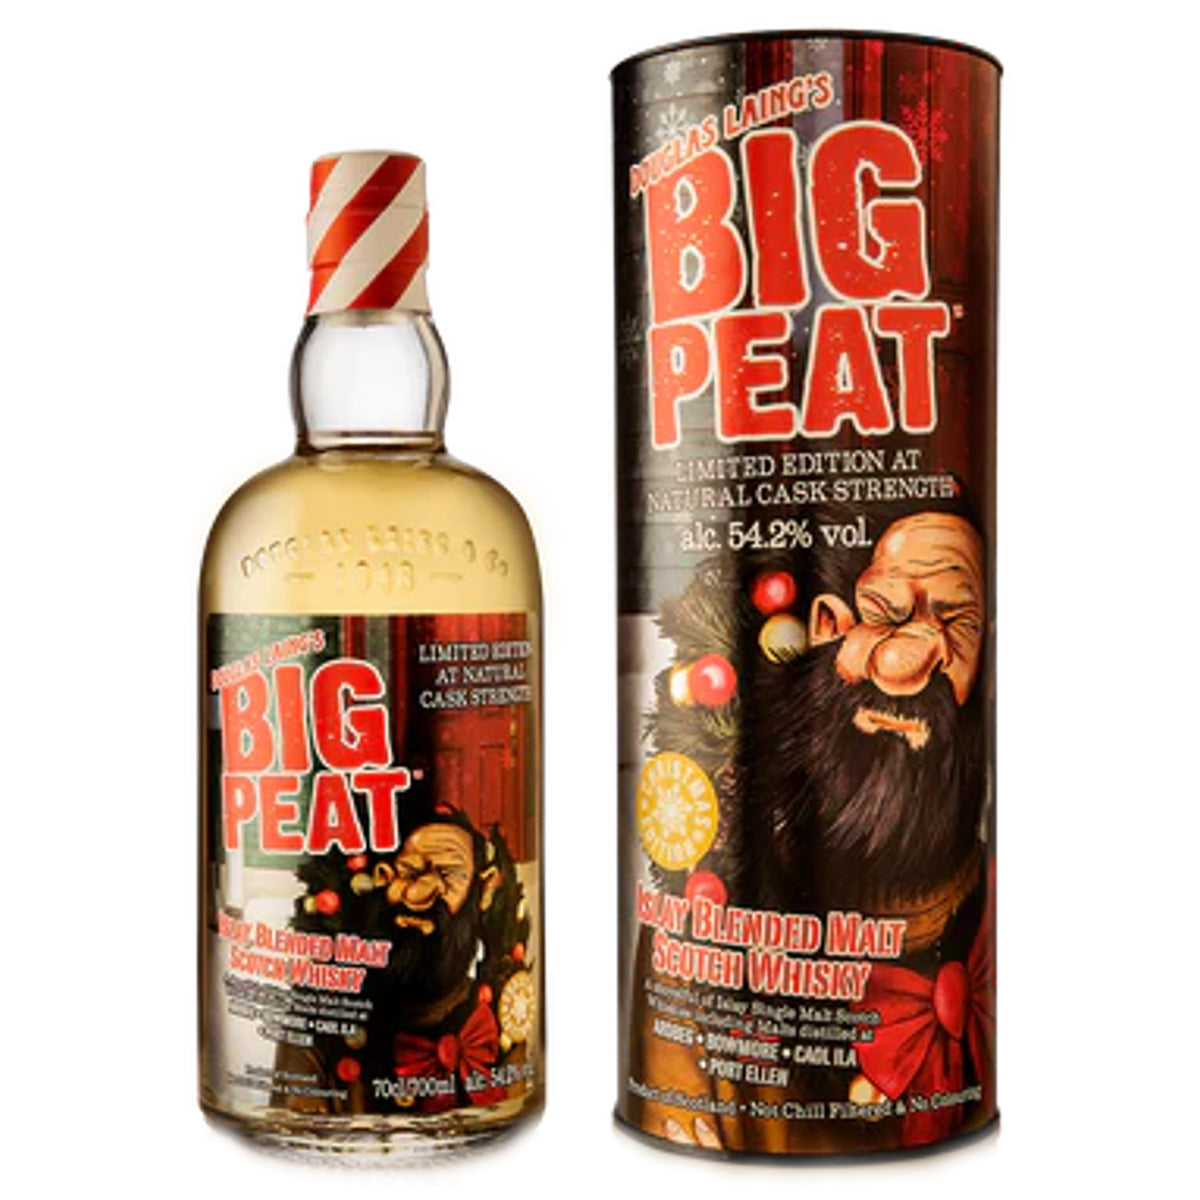 BUY] Big Peat Scotch Whisky